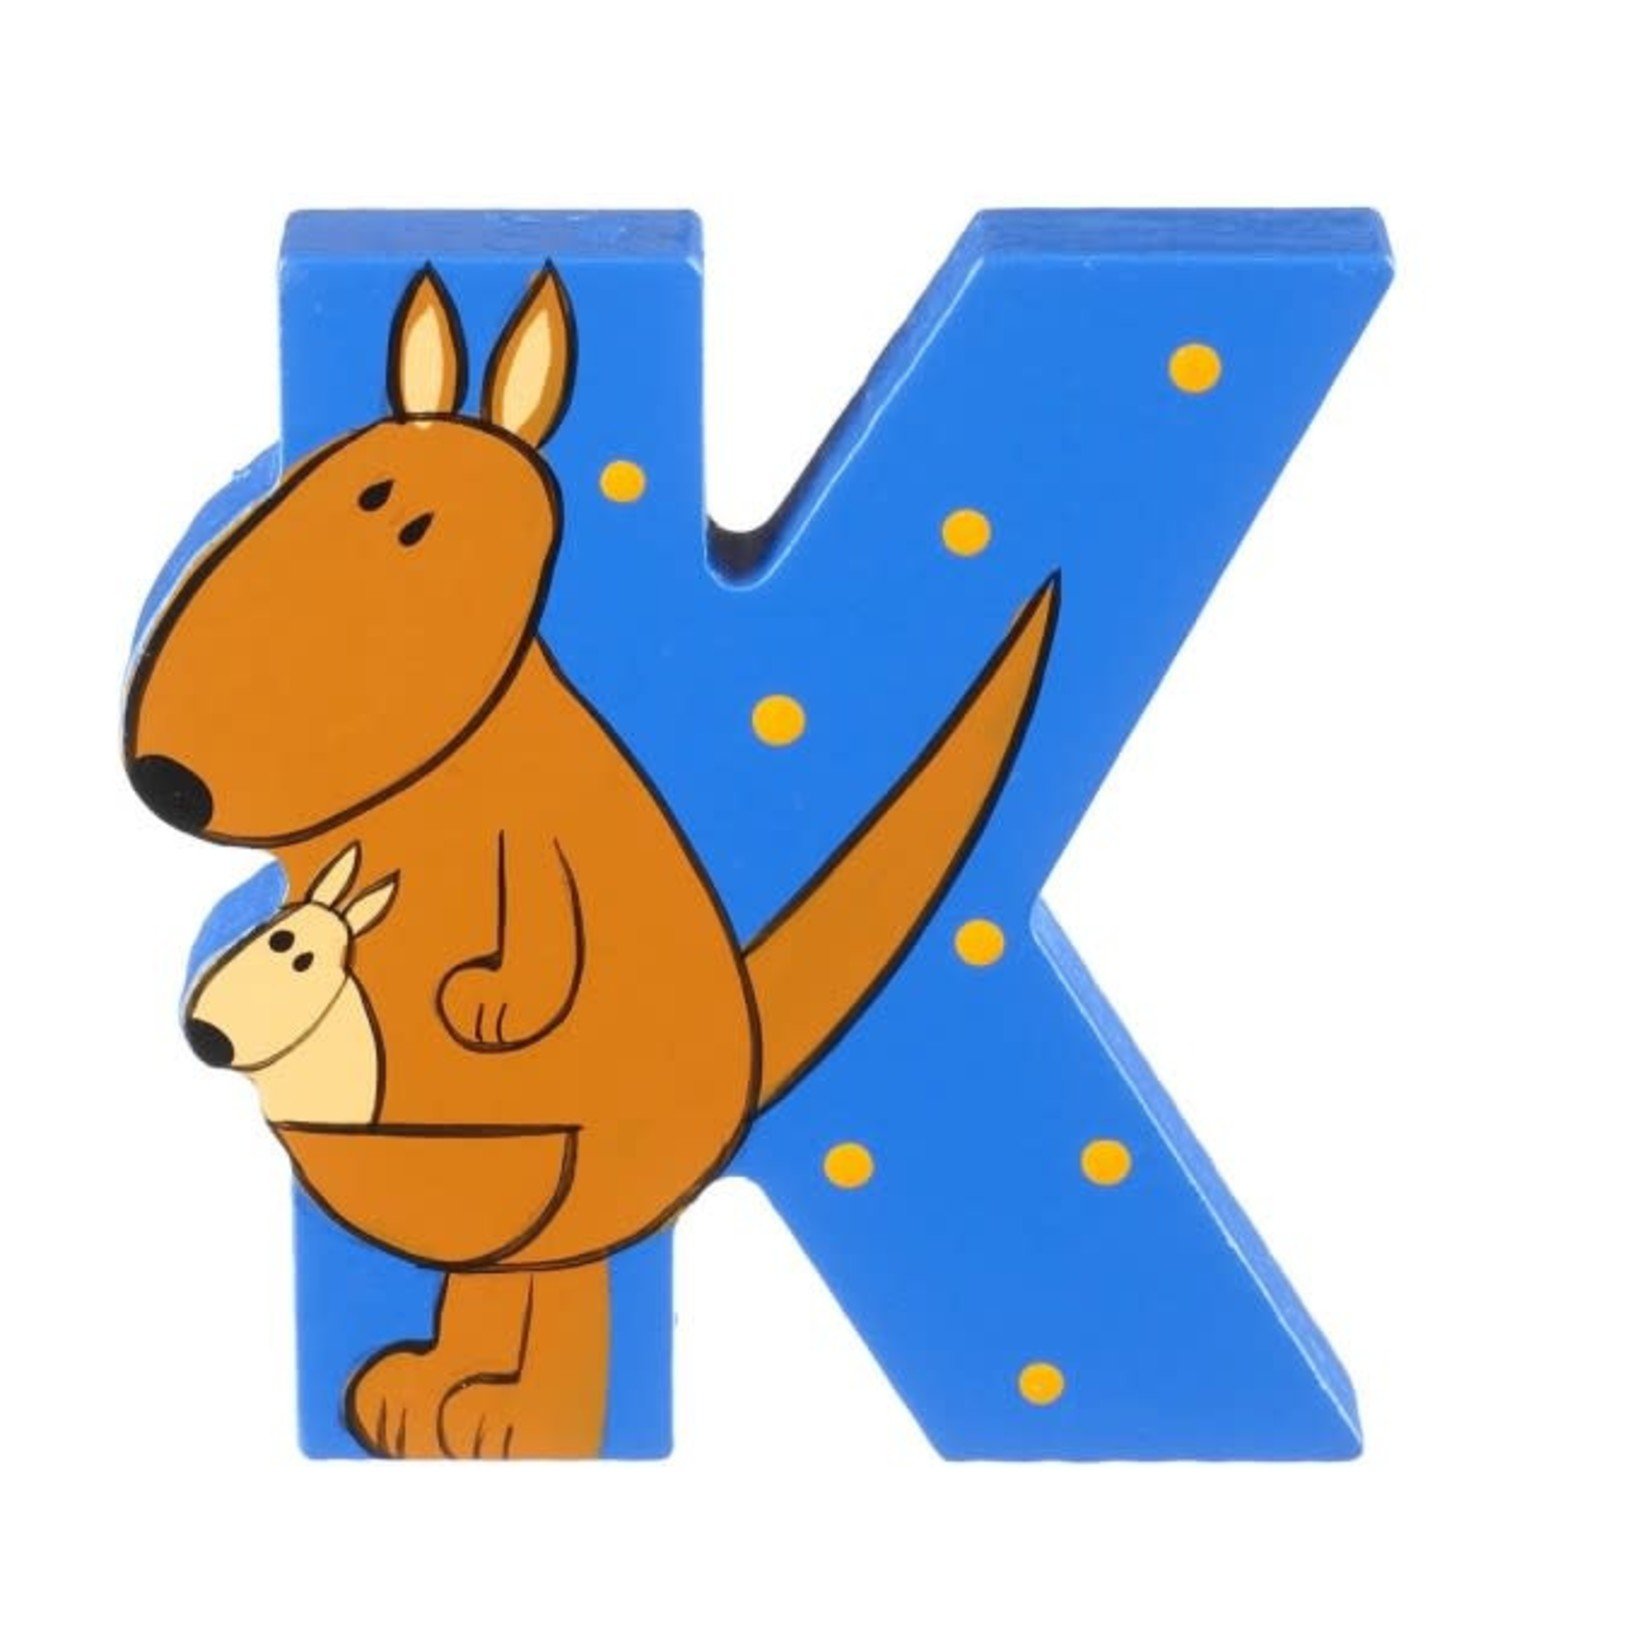 alphabet letter k nursery